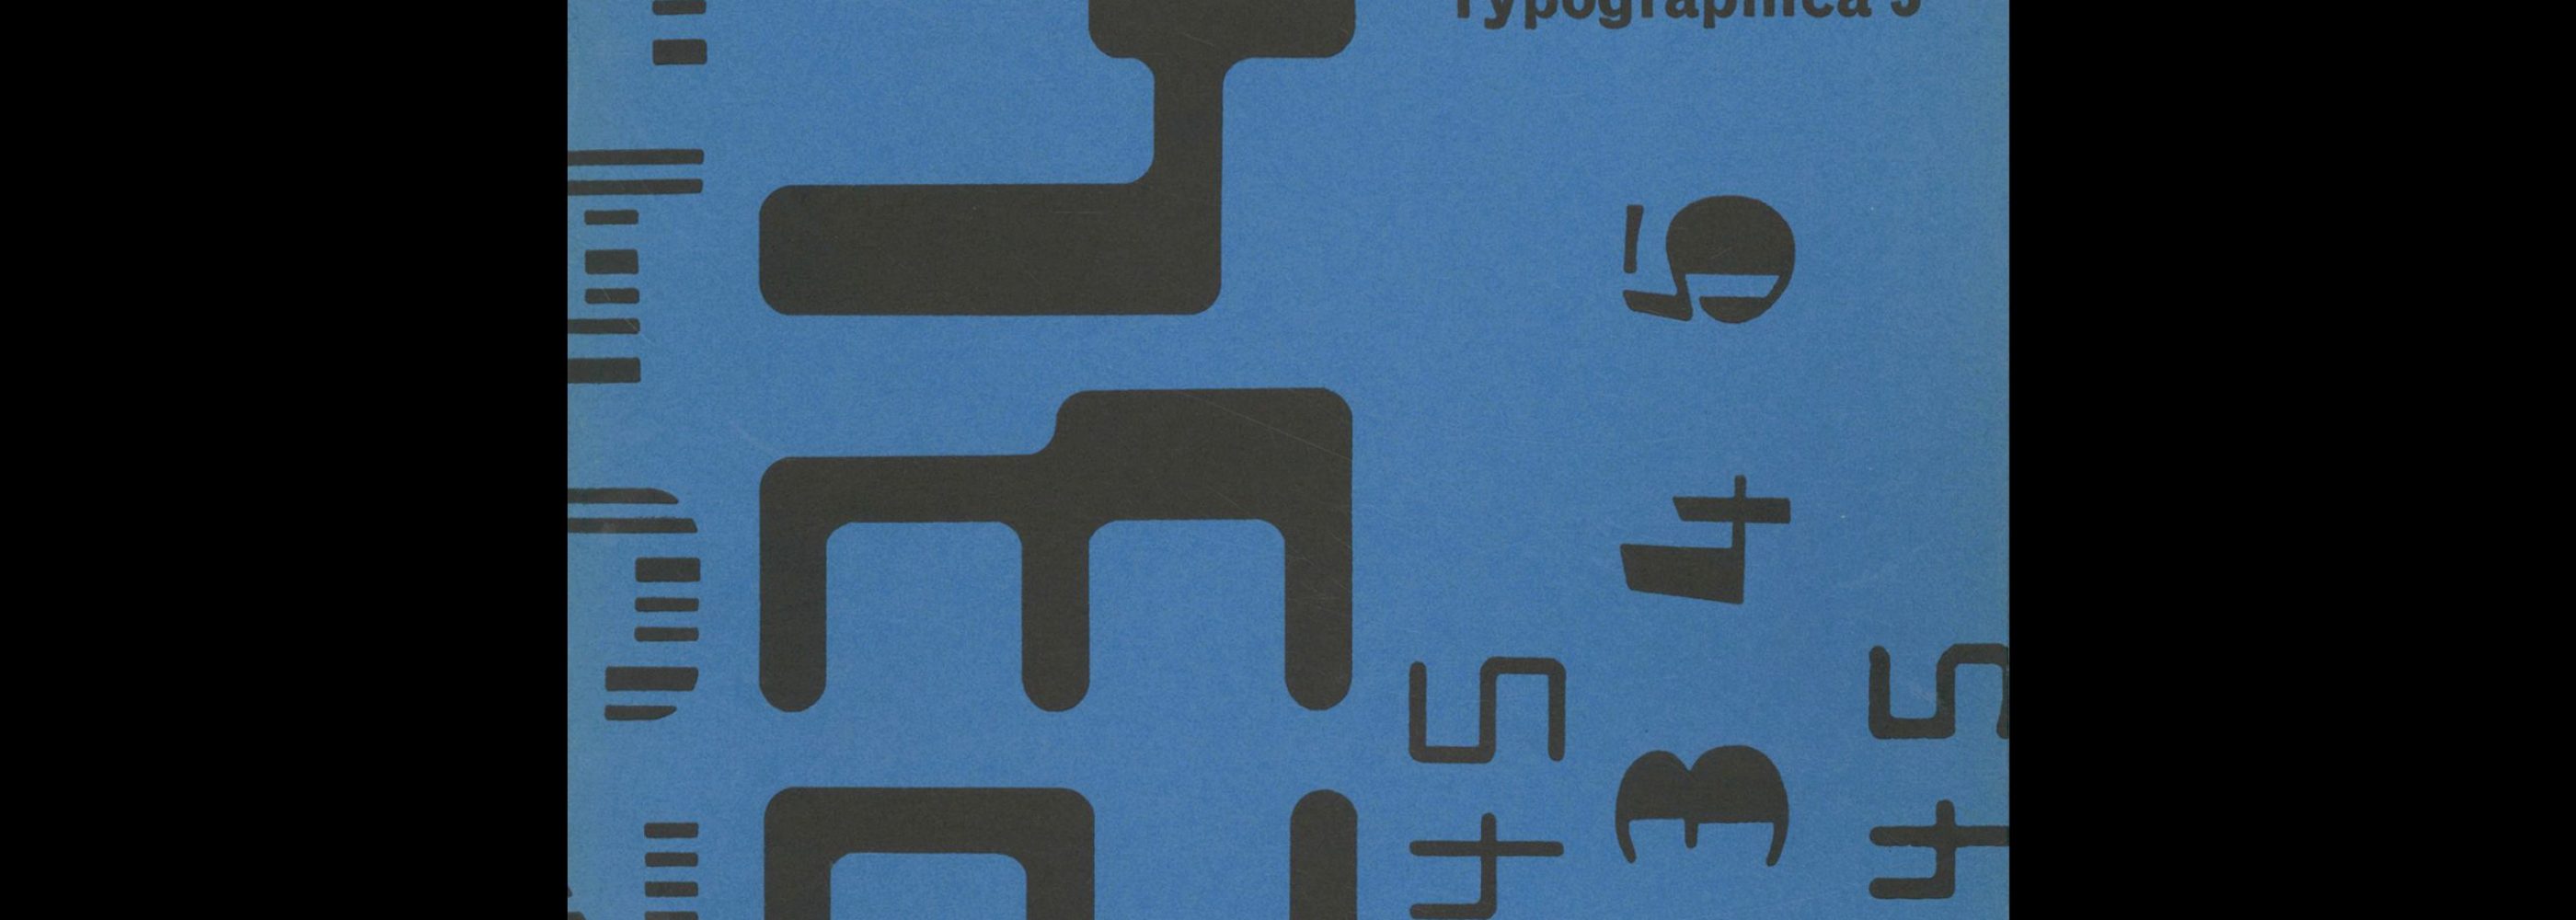 Typographica, New Series 5, 1962. Designed by Herbert Spencer